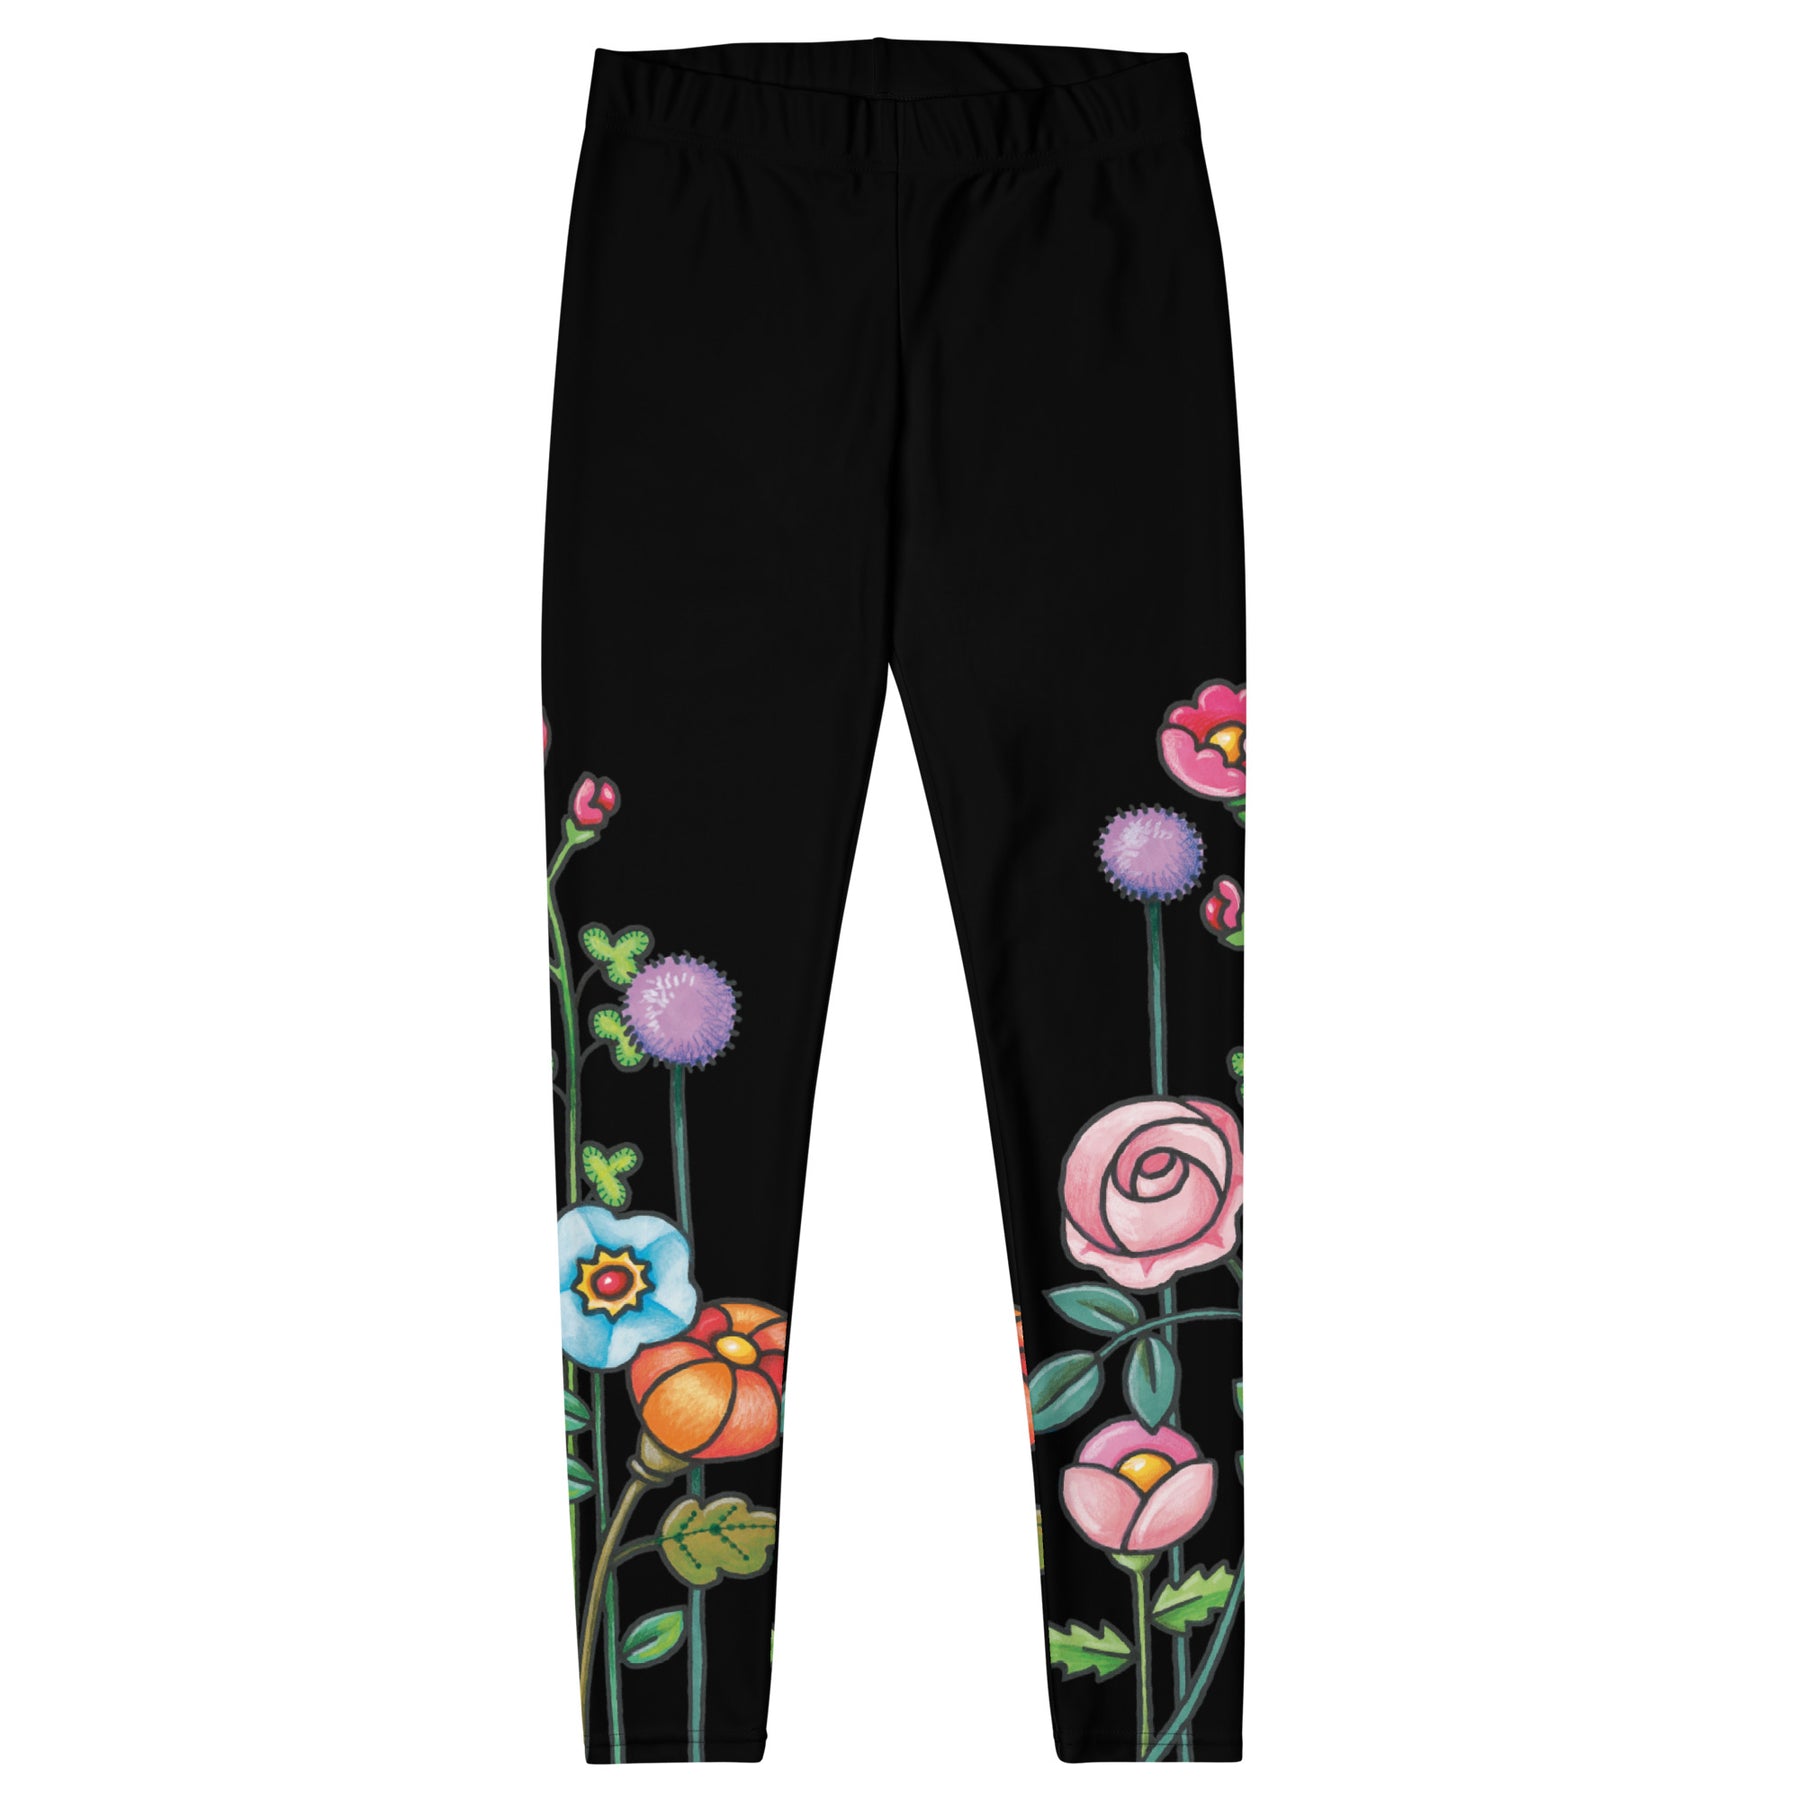 Floral leggings 